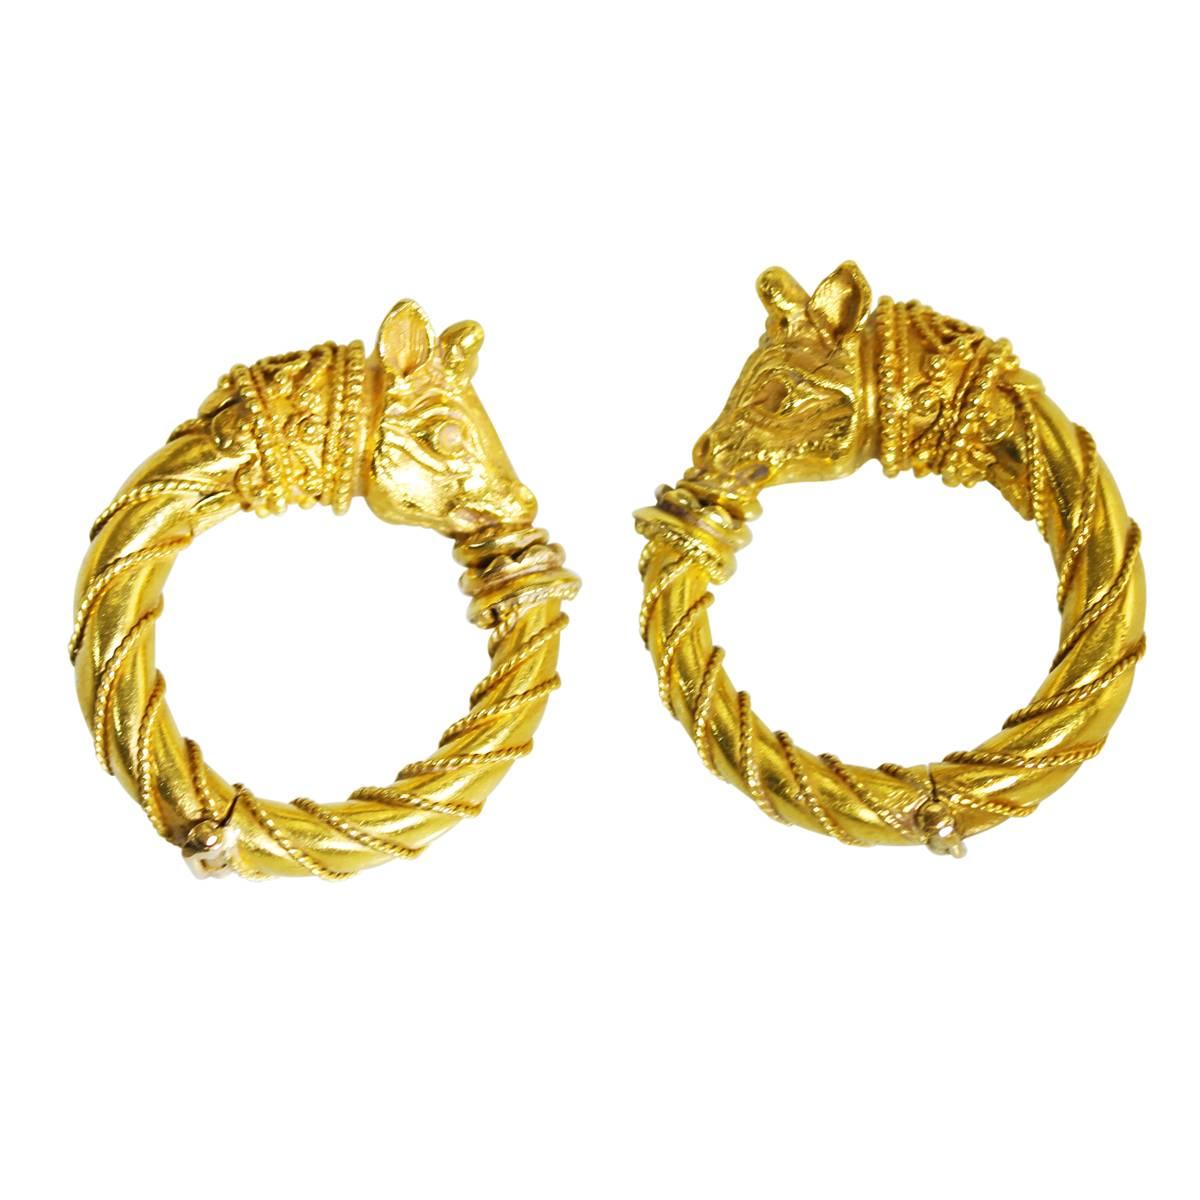 Zolotas Bull's Head Gold Hoop Earrings